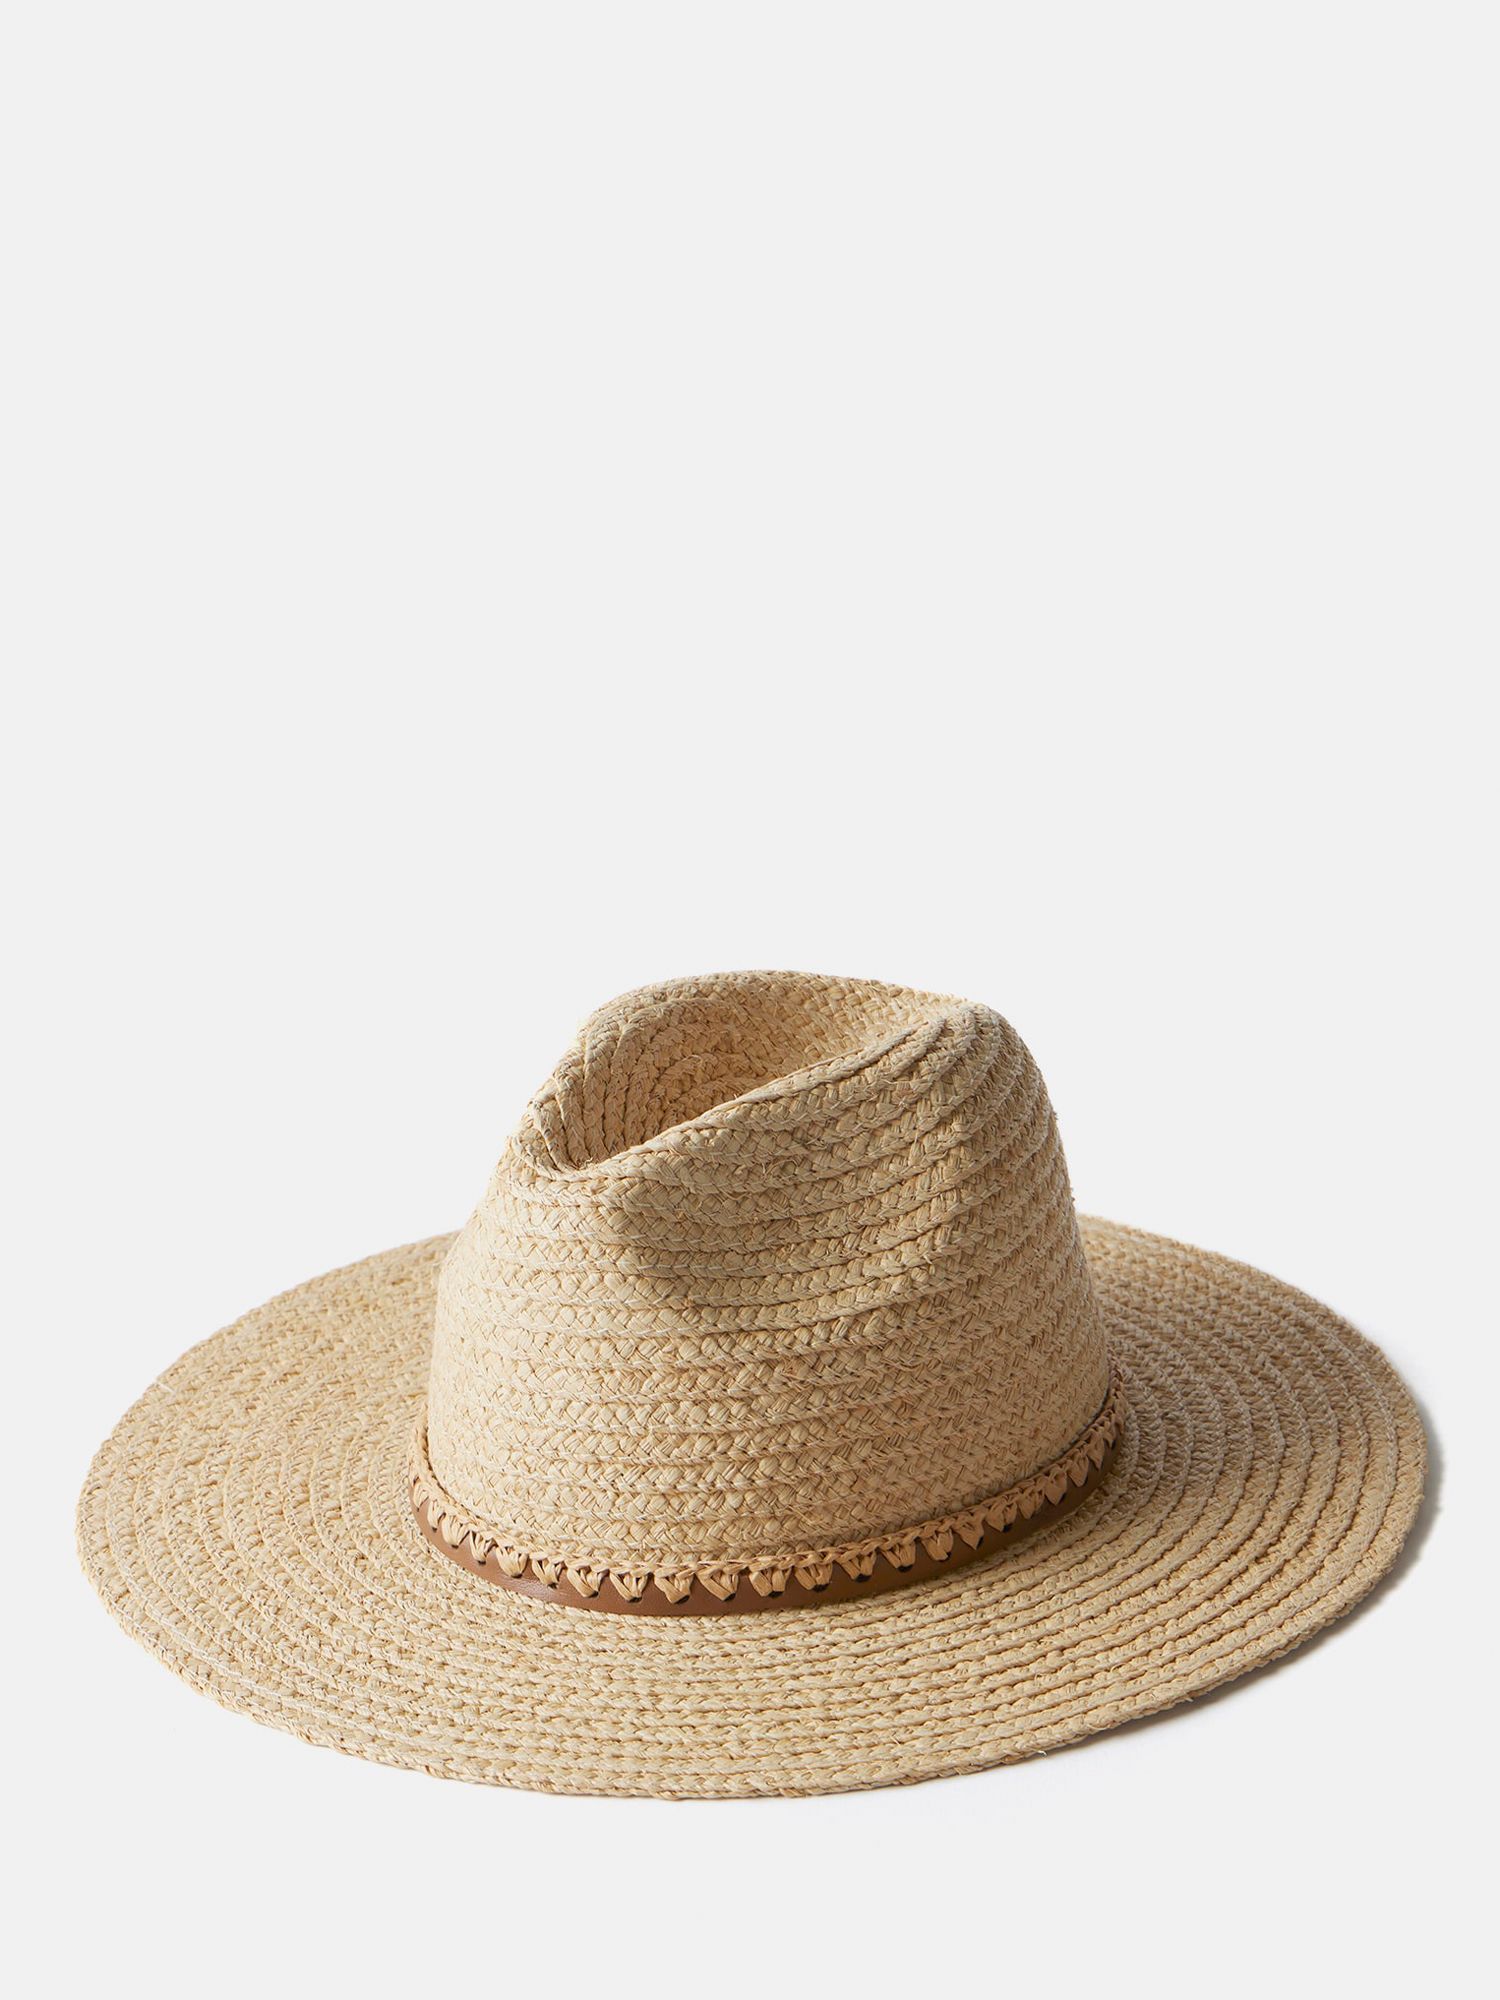 Mint Velvet Straw Fedora Hat, Natural, One Size